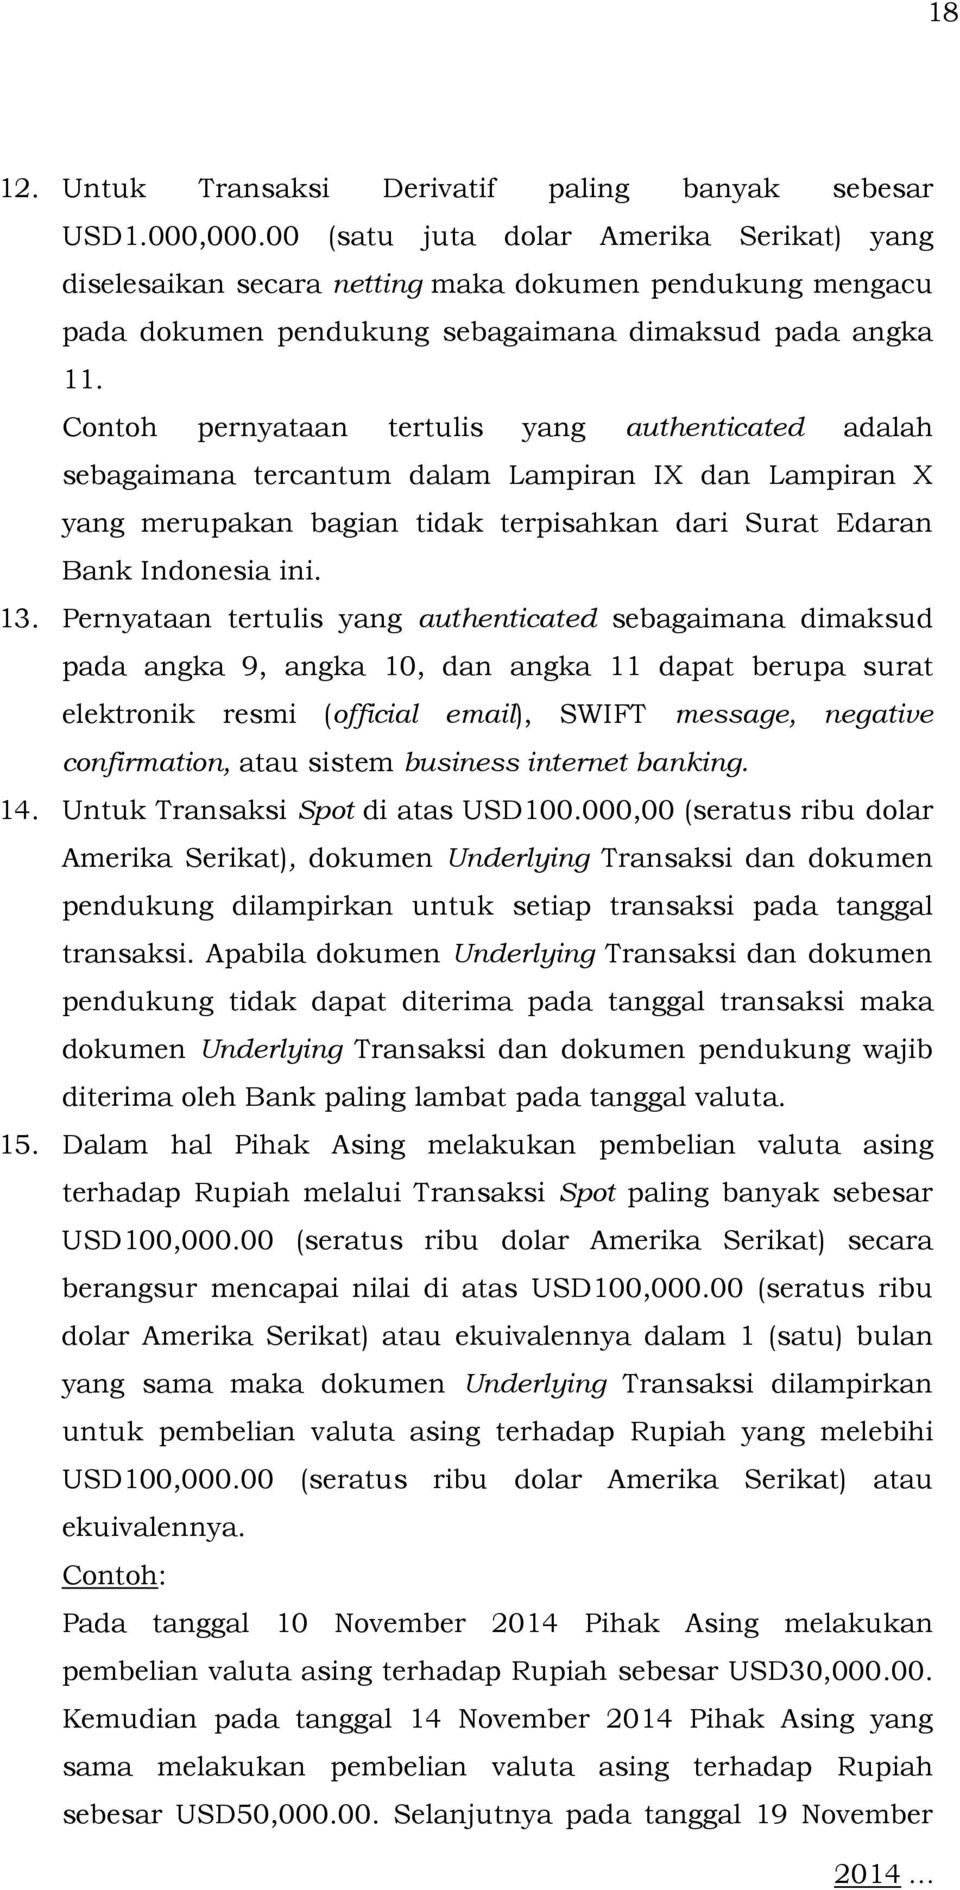 Contoh pernyataan tertulis yang authenticated adalah sebagaimana tercantum dalam Lampiran IX dan Lampiran X yang merupakan bagian tidak terpisahkan dari Surat Edaran Bank Indonesia ini. 13.